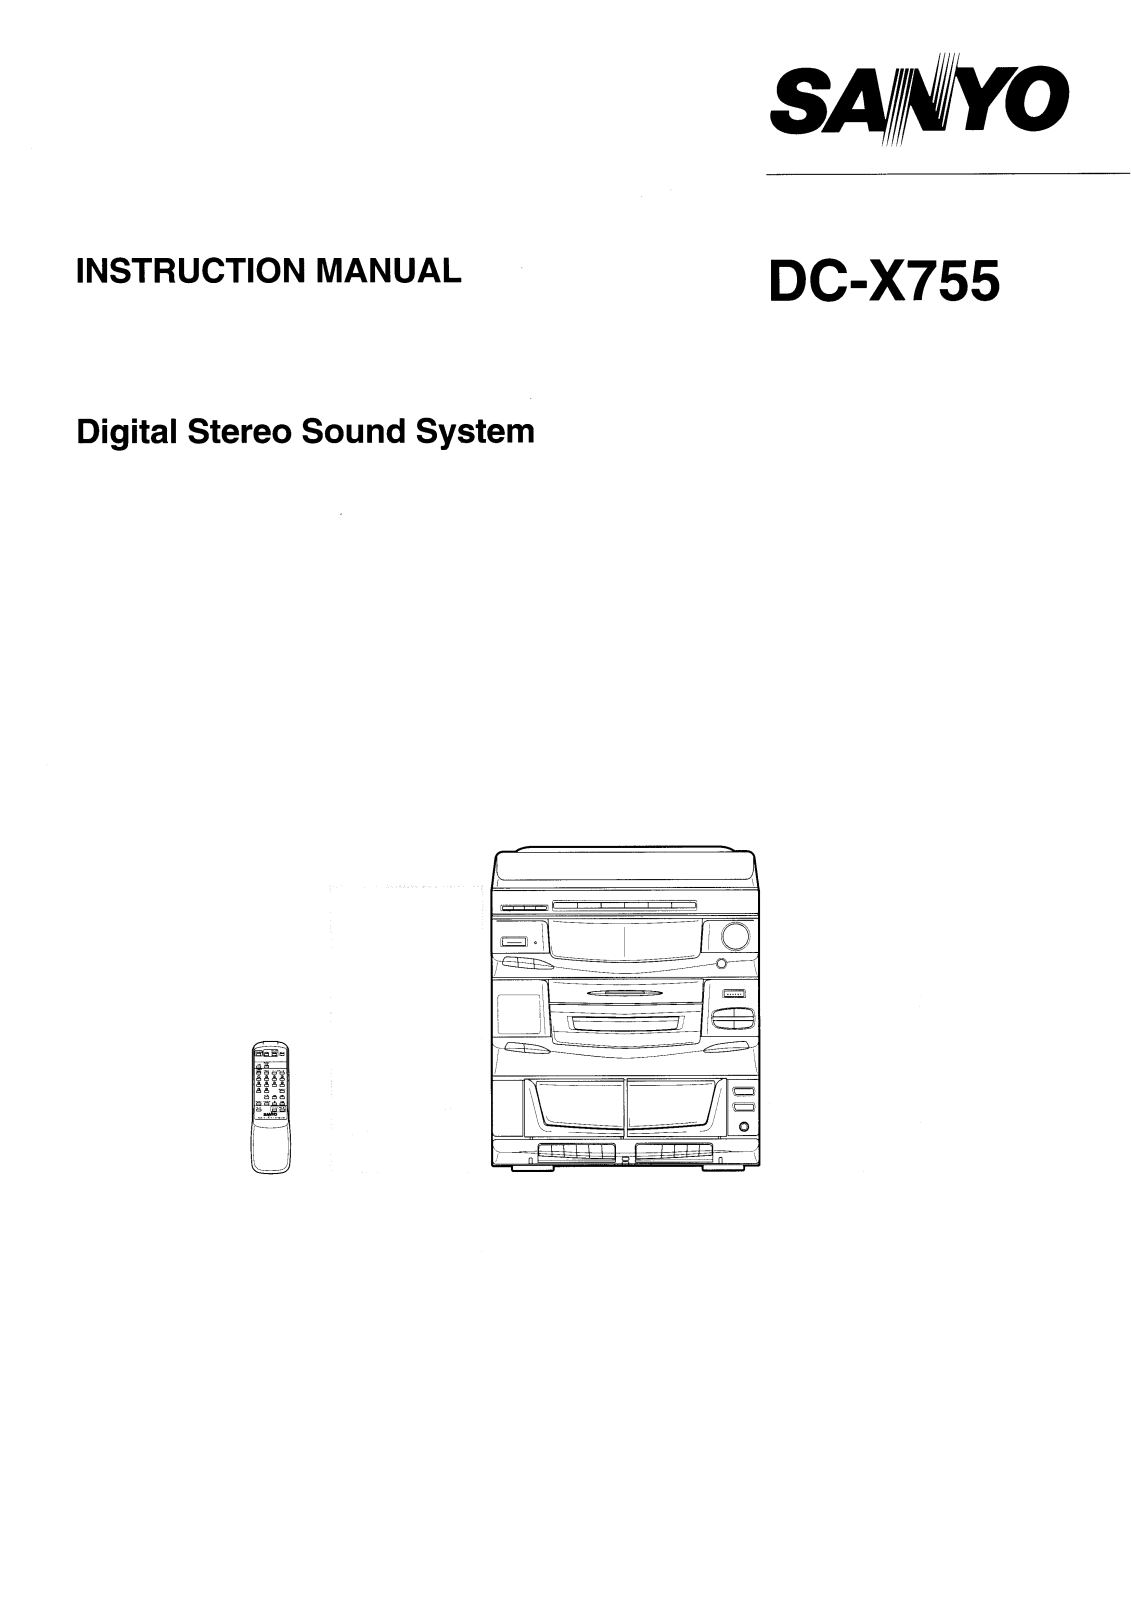 Sanyo DC-X755 Instruction Manual